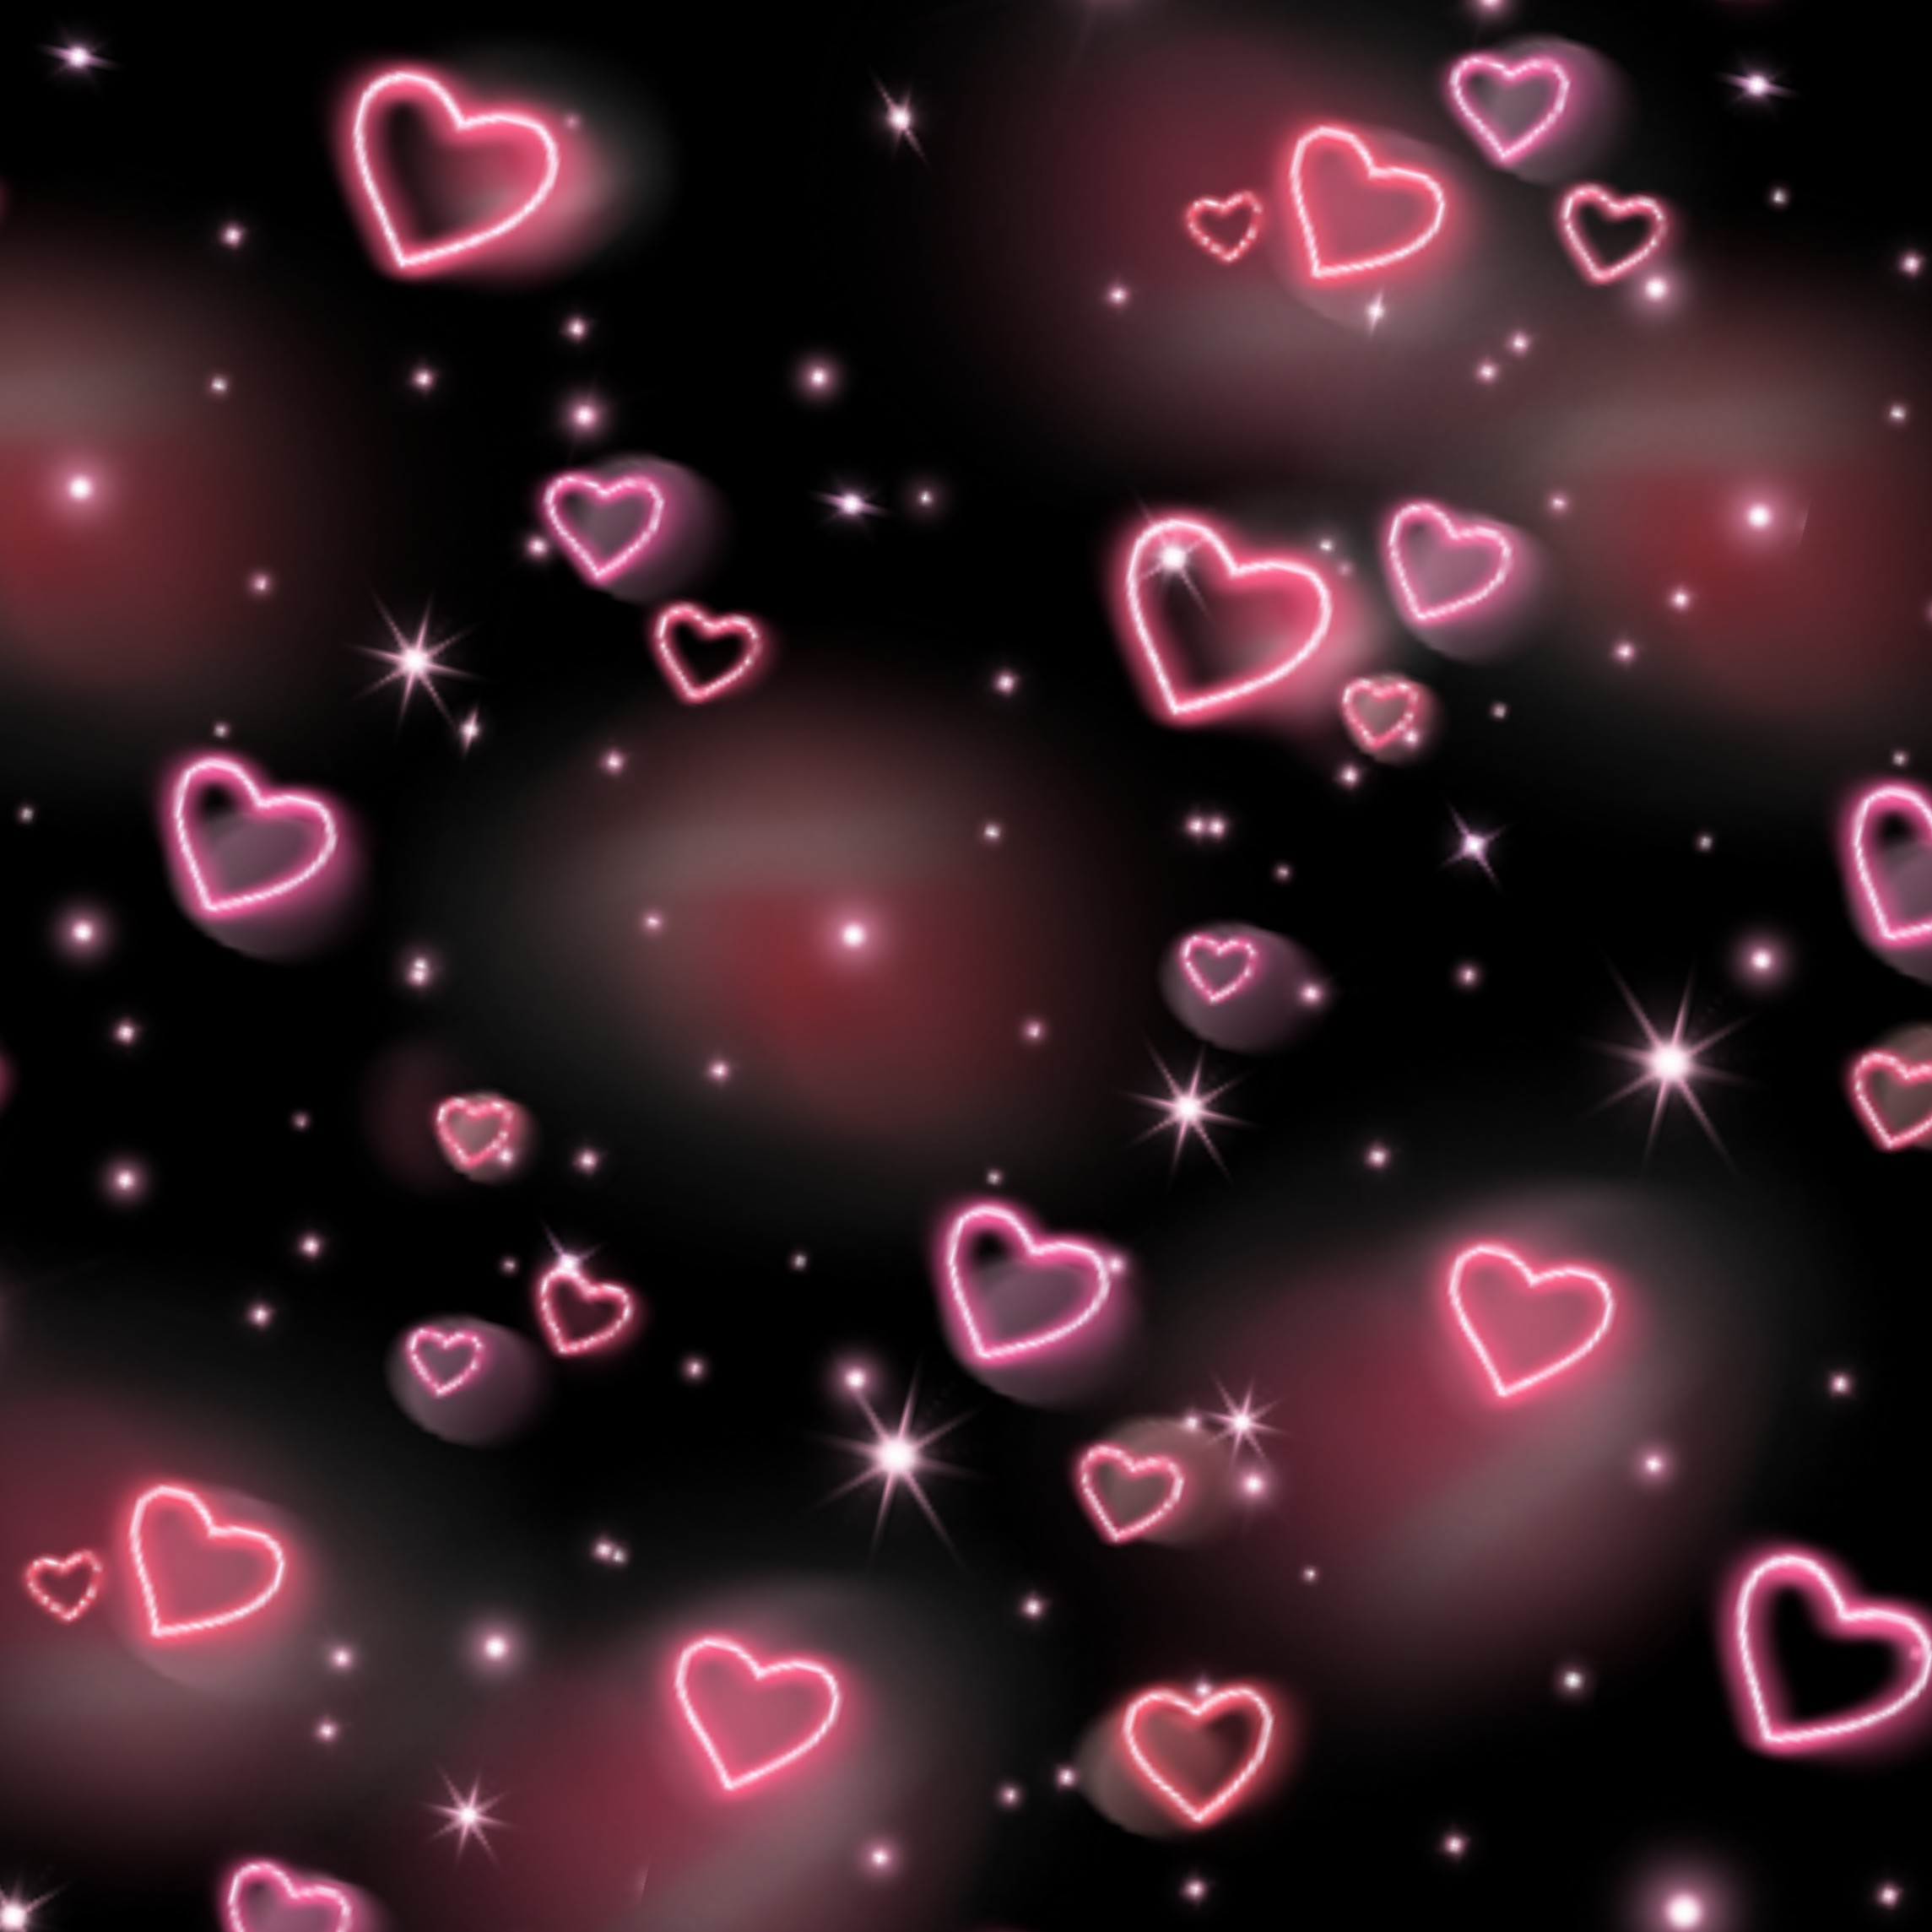 freetoedit background hearts pink image by @alisonrj2526